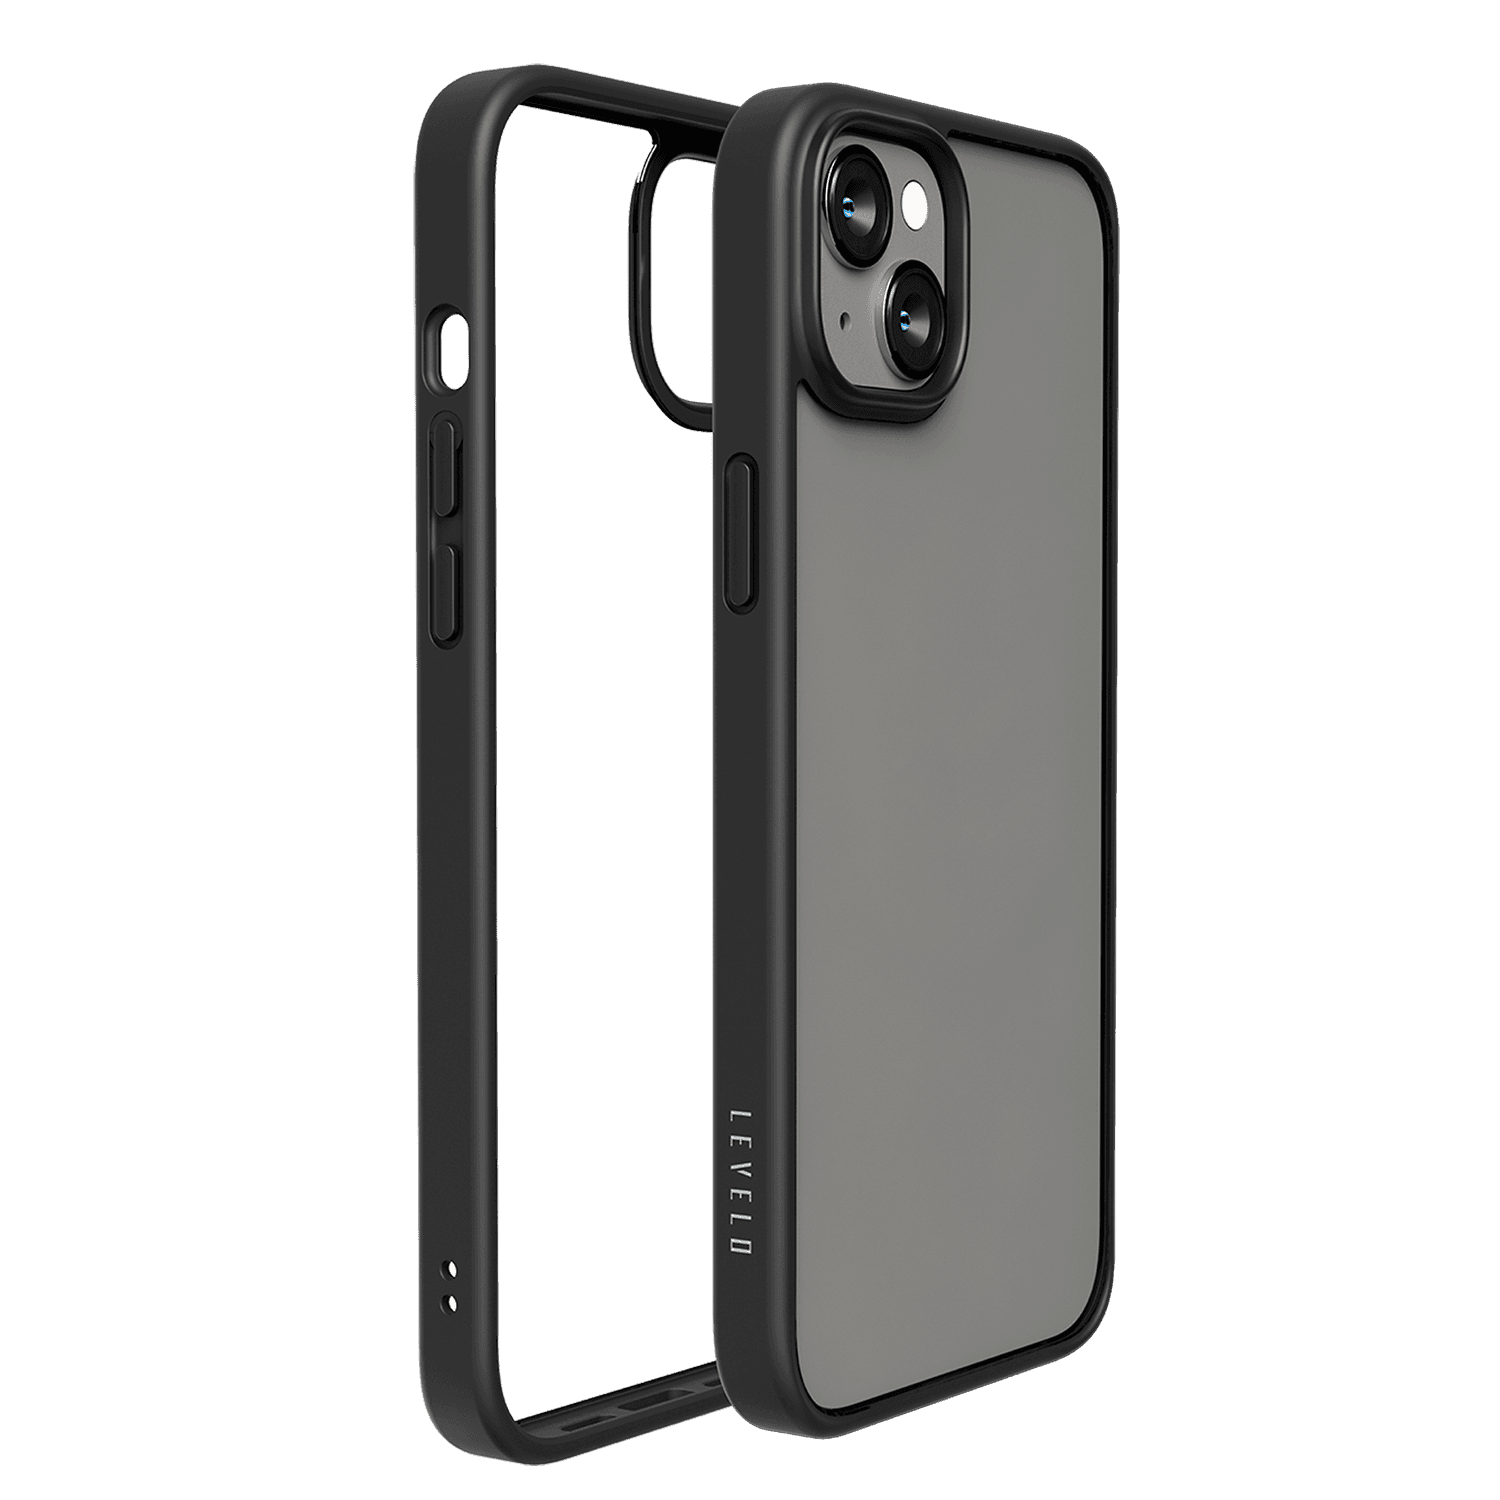 كفر ايفون لجوال ايفون 14 بلاس بلون شفاف وأسود ليفيلو  Levelo Solo iPhone 14 Plus Clear Back Case Black - cG9zdDoxMzk0MzI1